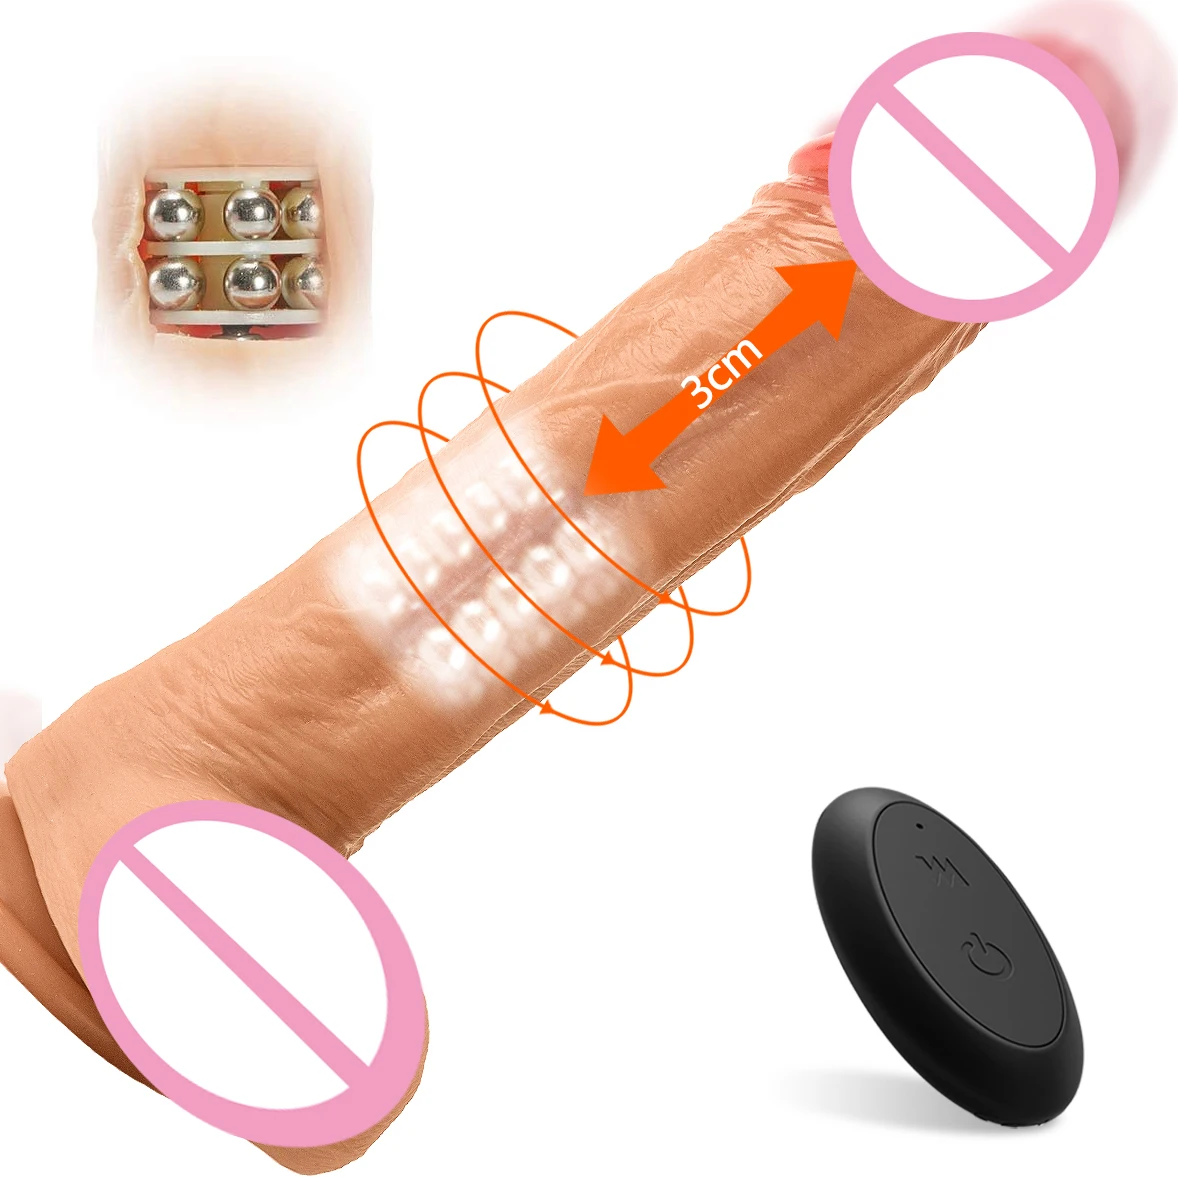 Wholesale 360 Degree Rotating Thrusting Dildo Adult Sex Toy Female Masturbation Wireless Control Anal Dildo Vibrator for Women From m.alibaba